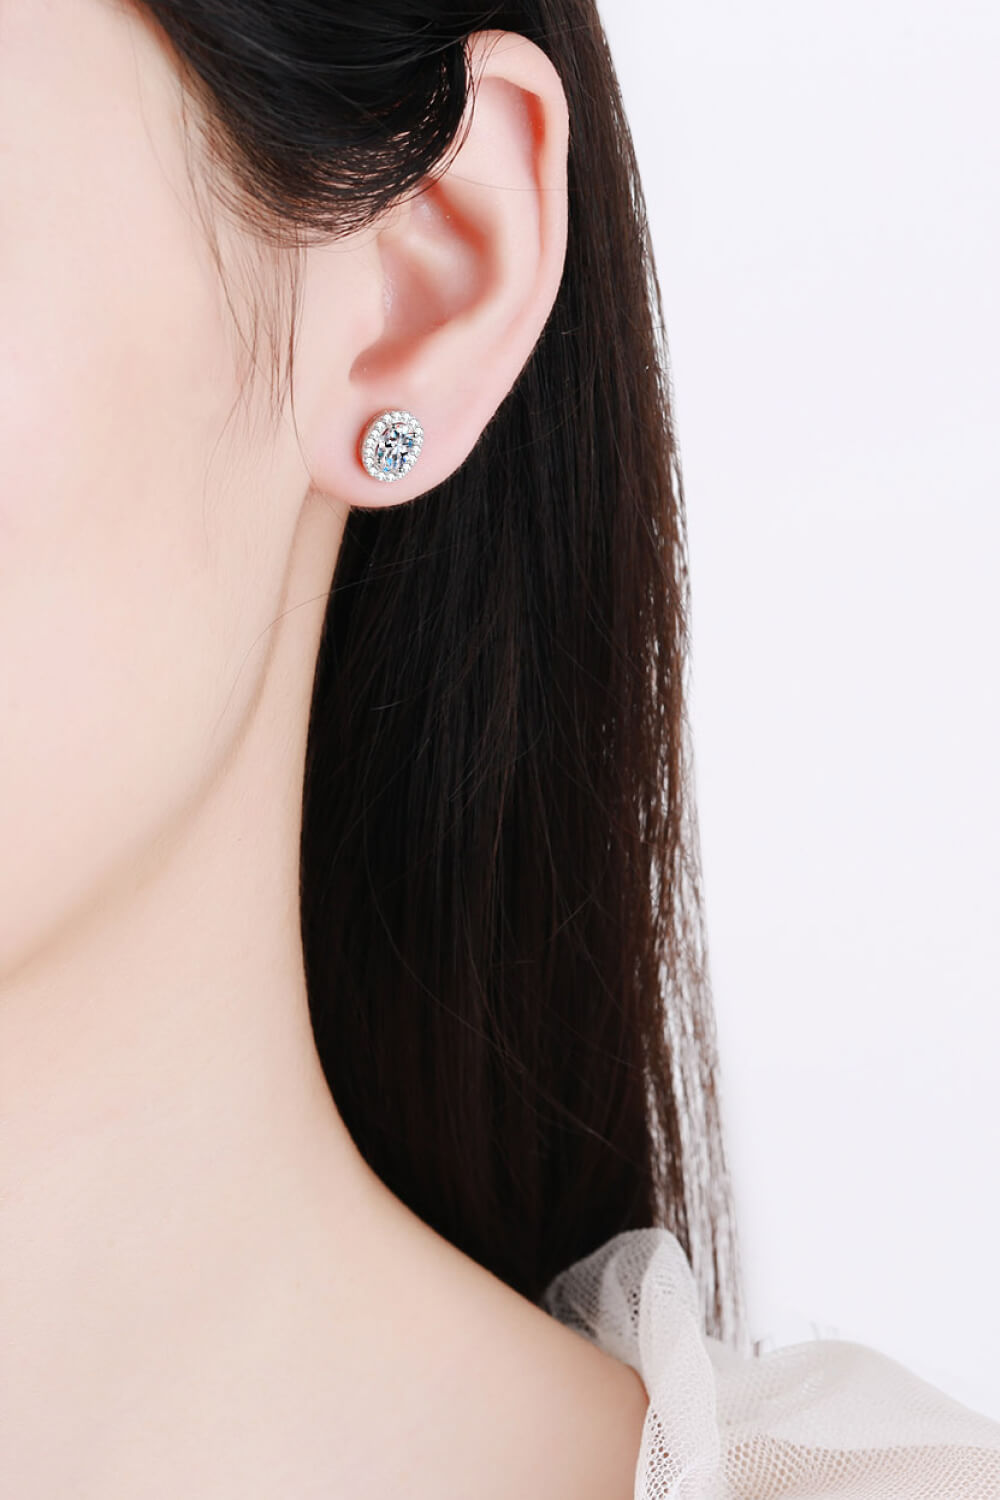 Future Style Moissanite Stud Earrings - Earrings - FITGGINS